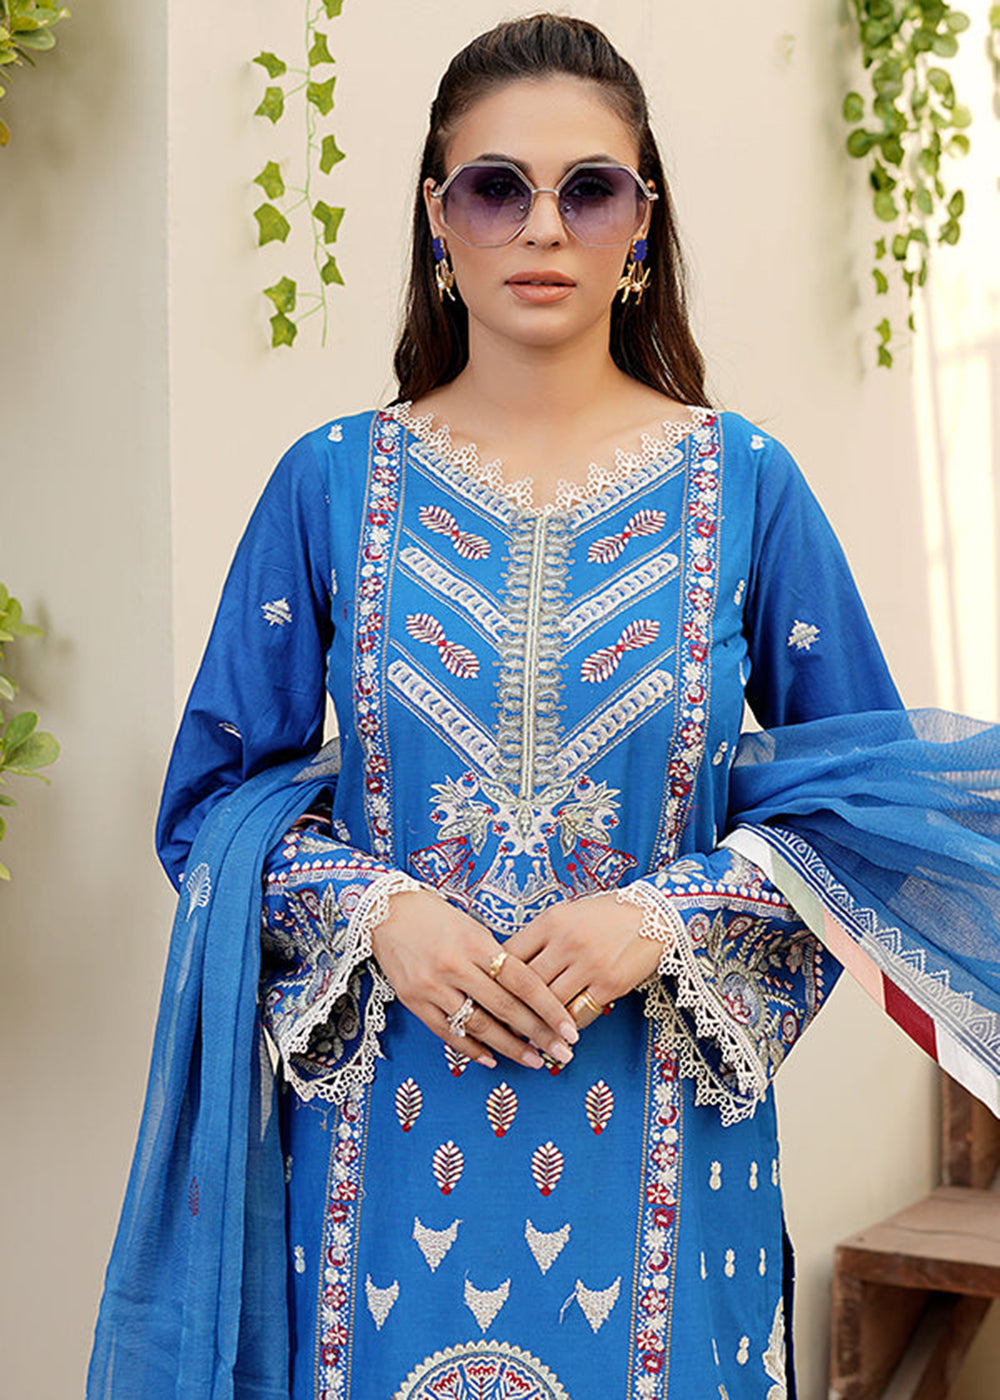 Buy Now Blue Lawn Dress - Bahaar Luxury Lawn by Mariyam's - Lara B-1016 Online in USA, UK, Canada & Worldwide at Empress Clothing.